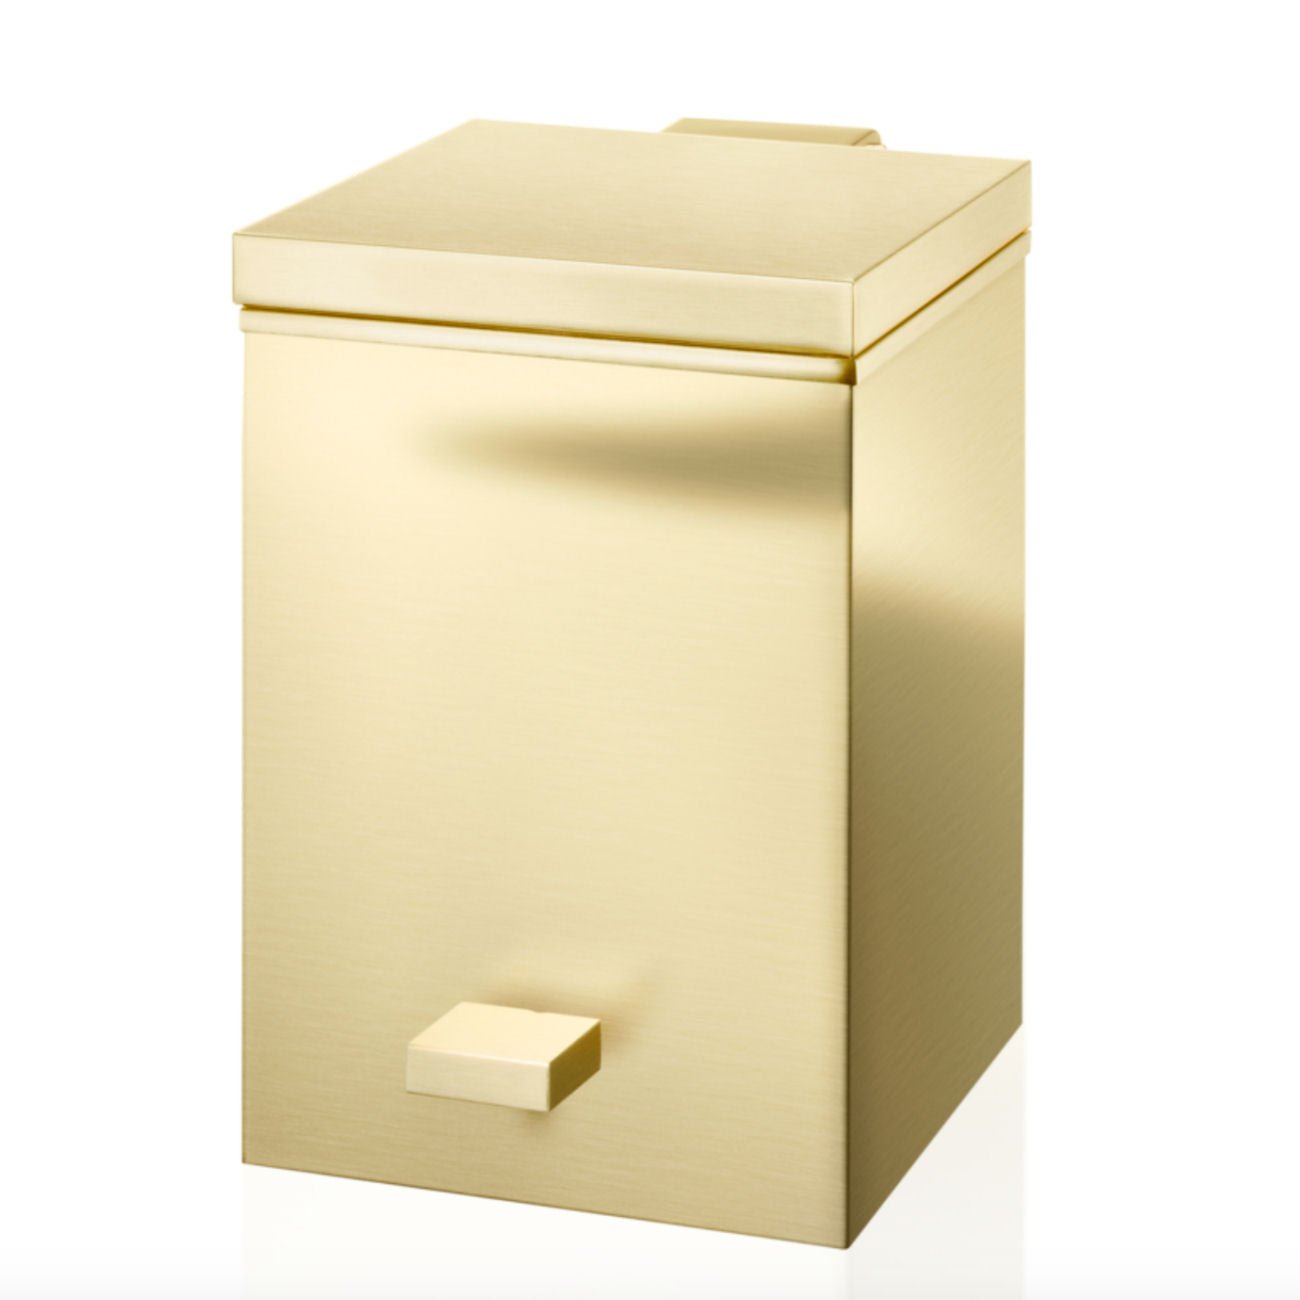 Luxury Classic Cube Design Matt Gold Bathroom Pedal Bin - |VESIMI Design|